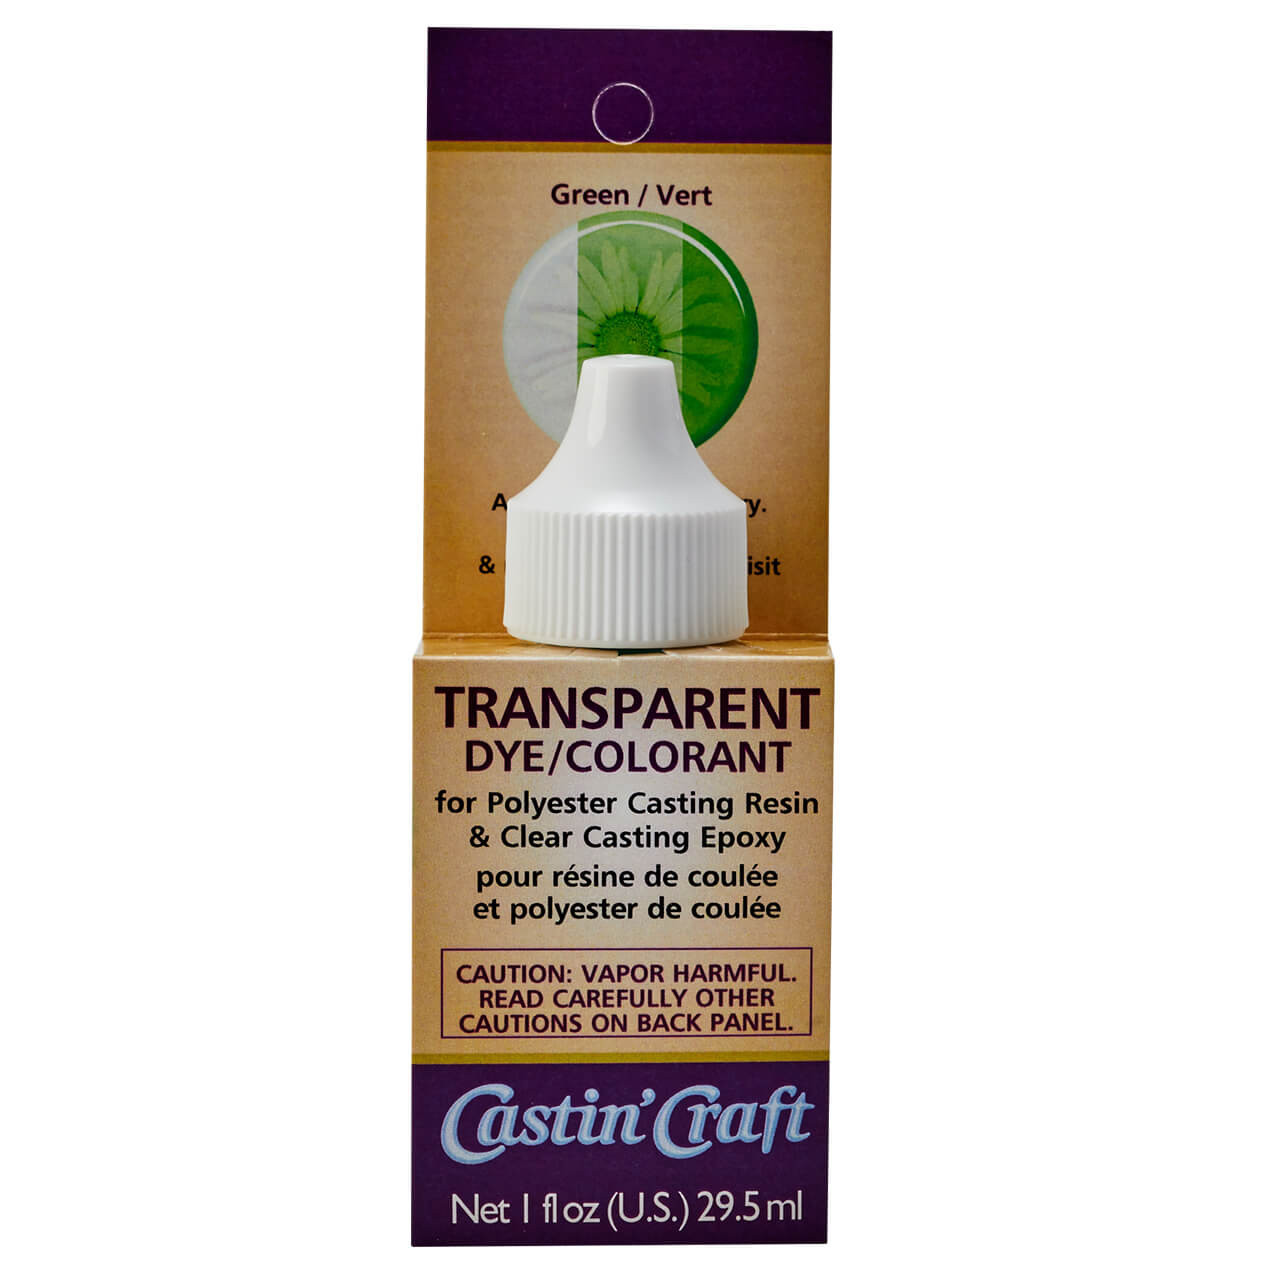 17colors 2g/bag Environmentally Candle Dye DIY Resin Colorant